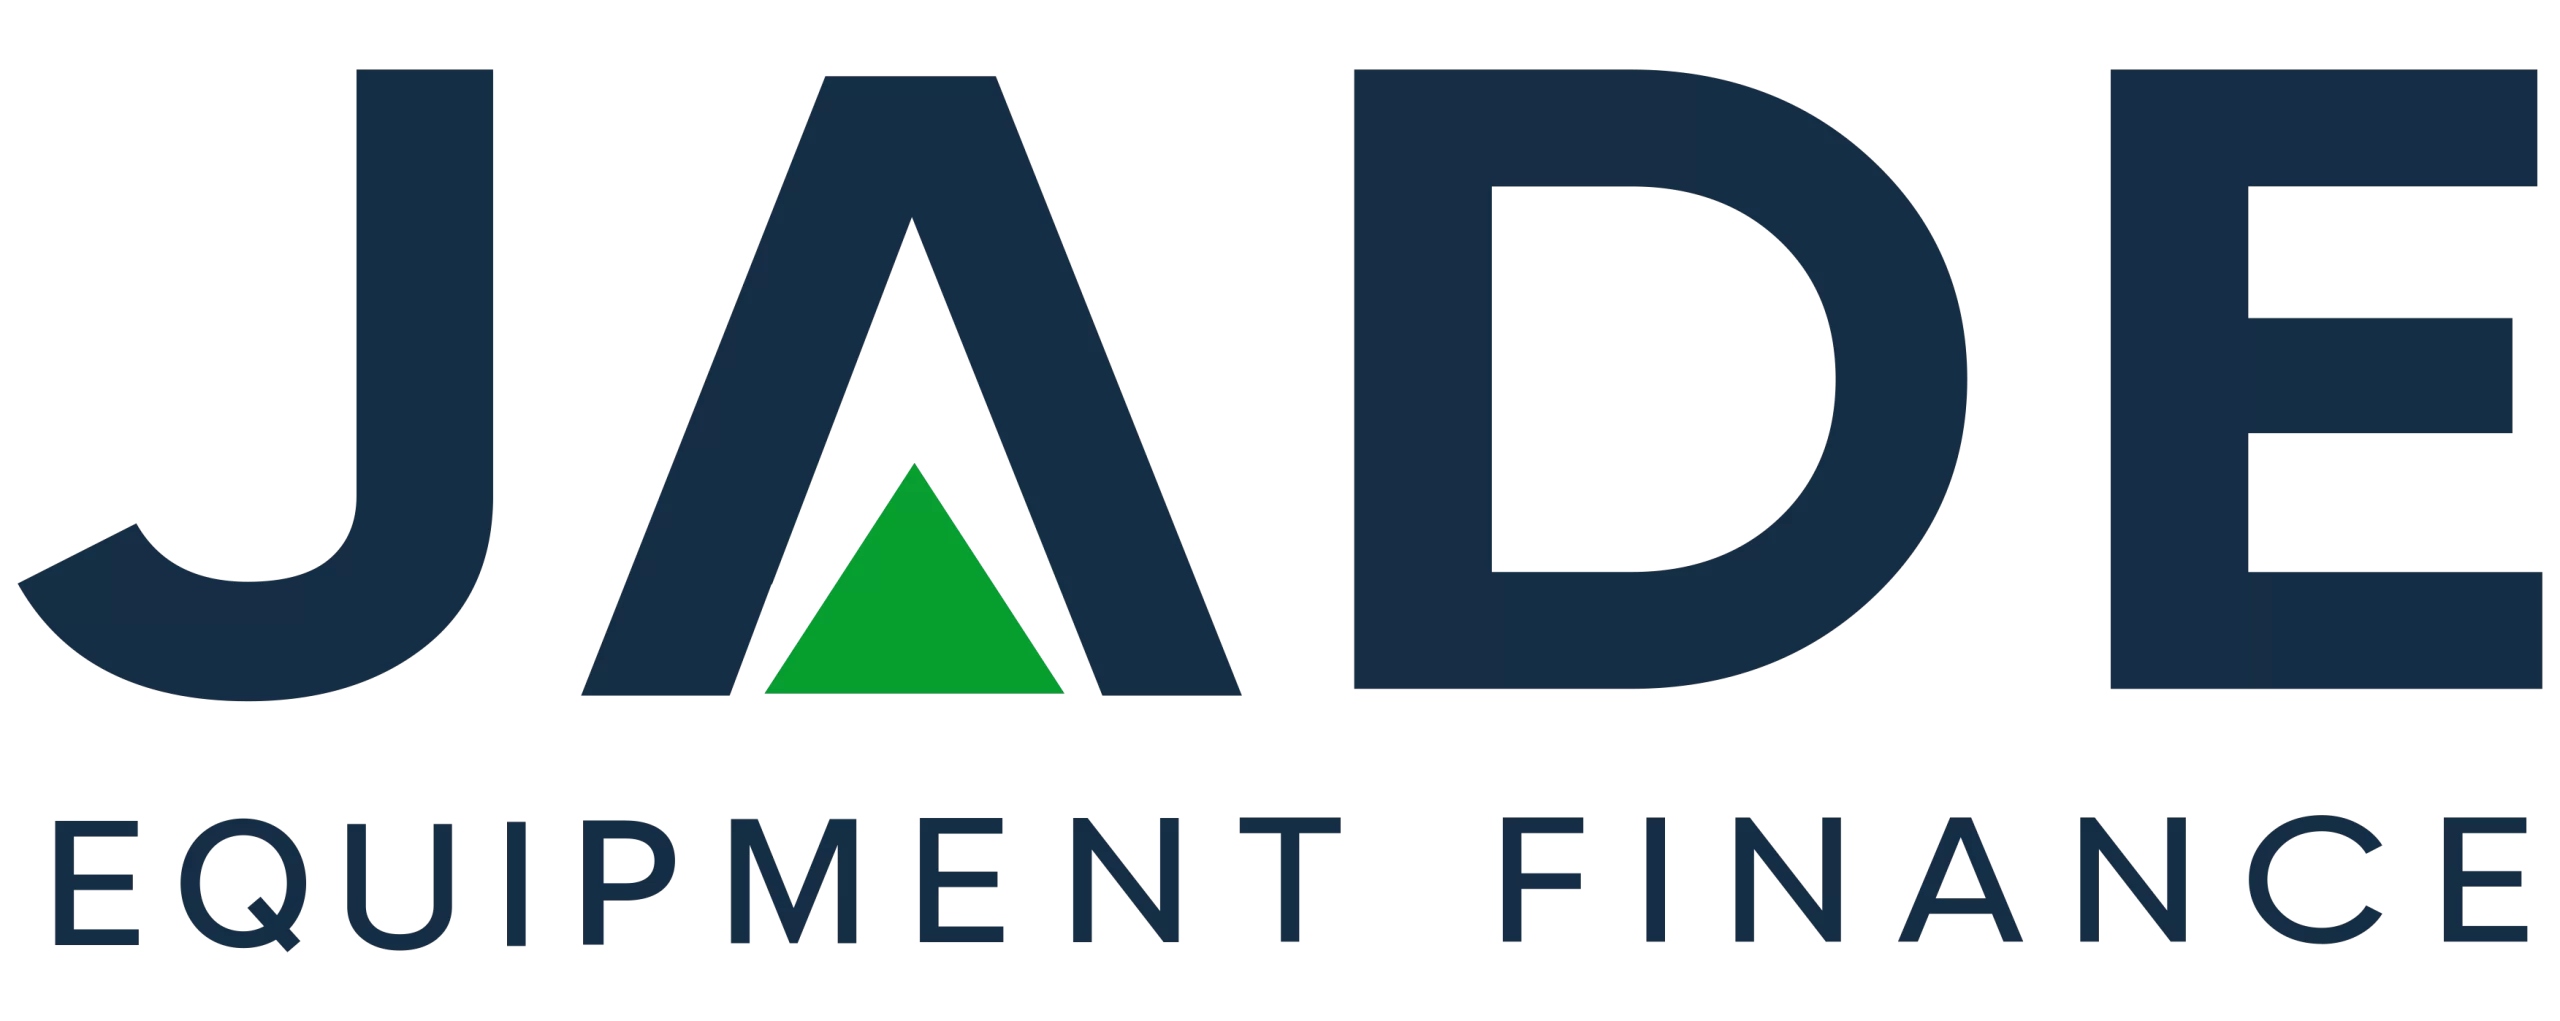 Jade Equipment Finance logo transparent